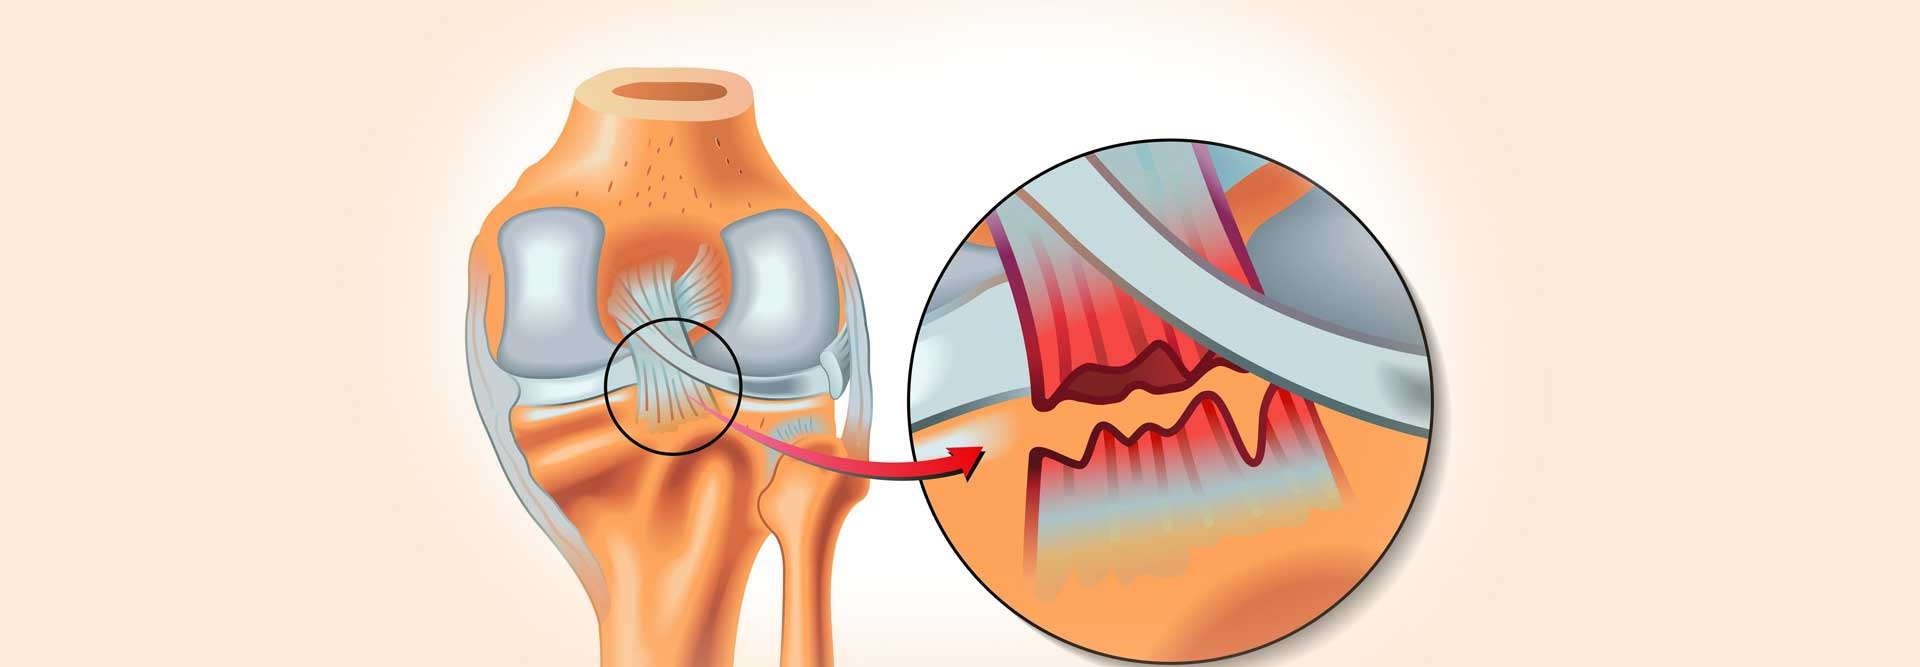 Self-Healing Knee Posterior cruciate ligament Injury - Self Healing Course